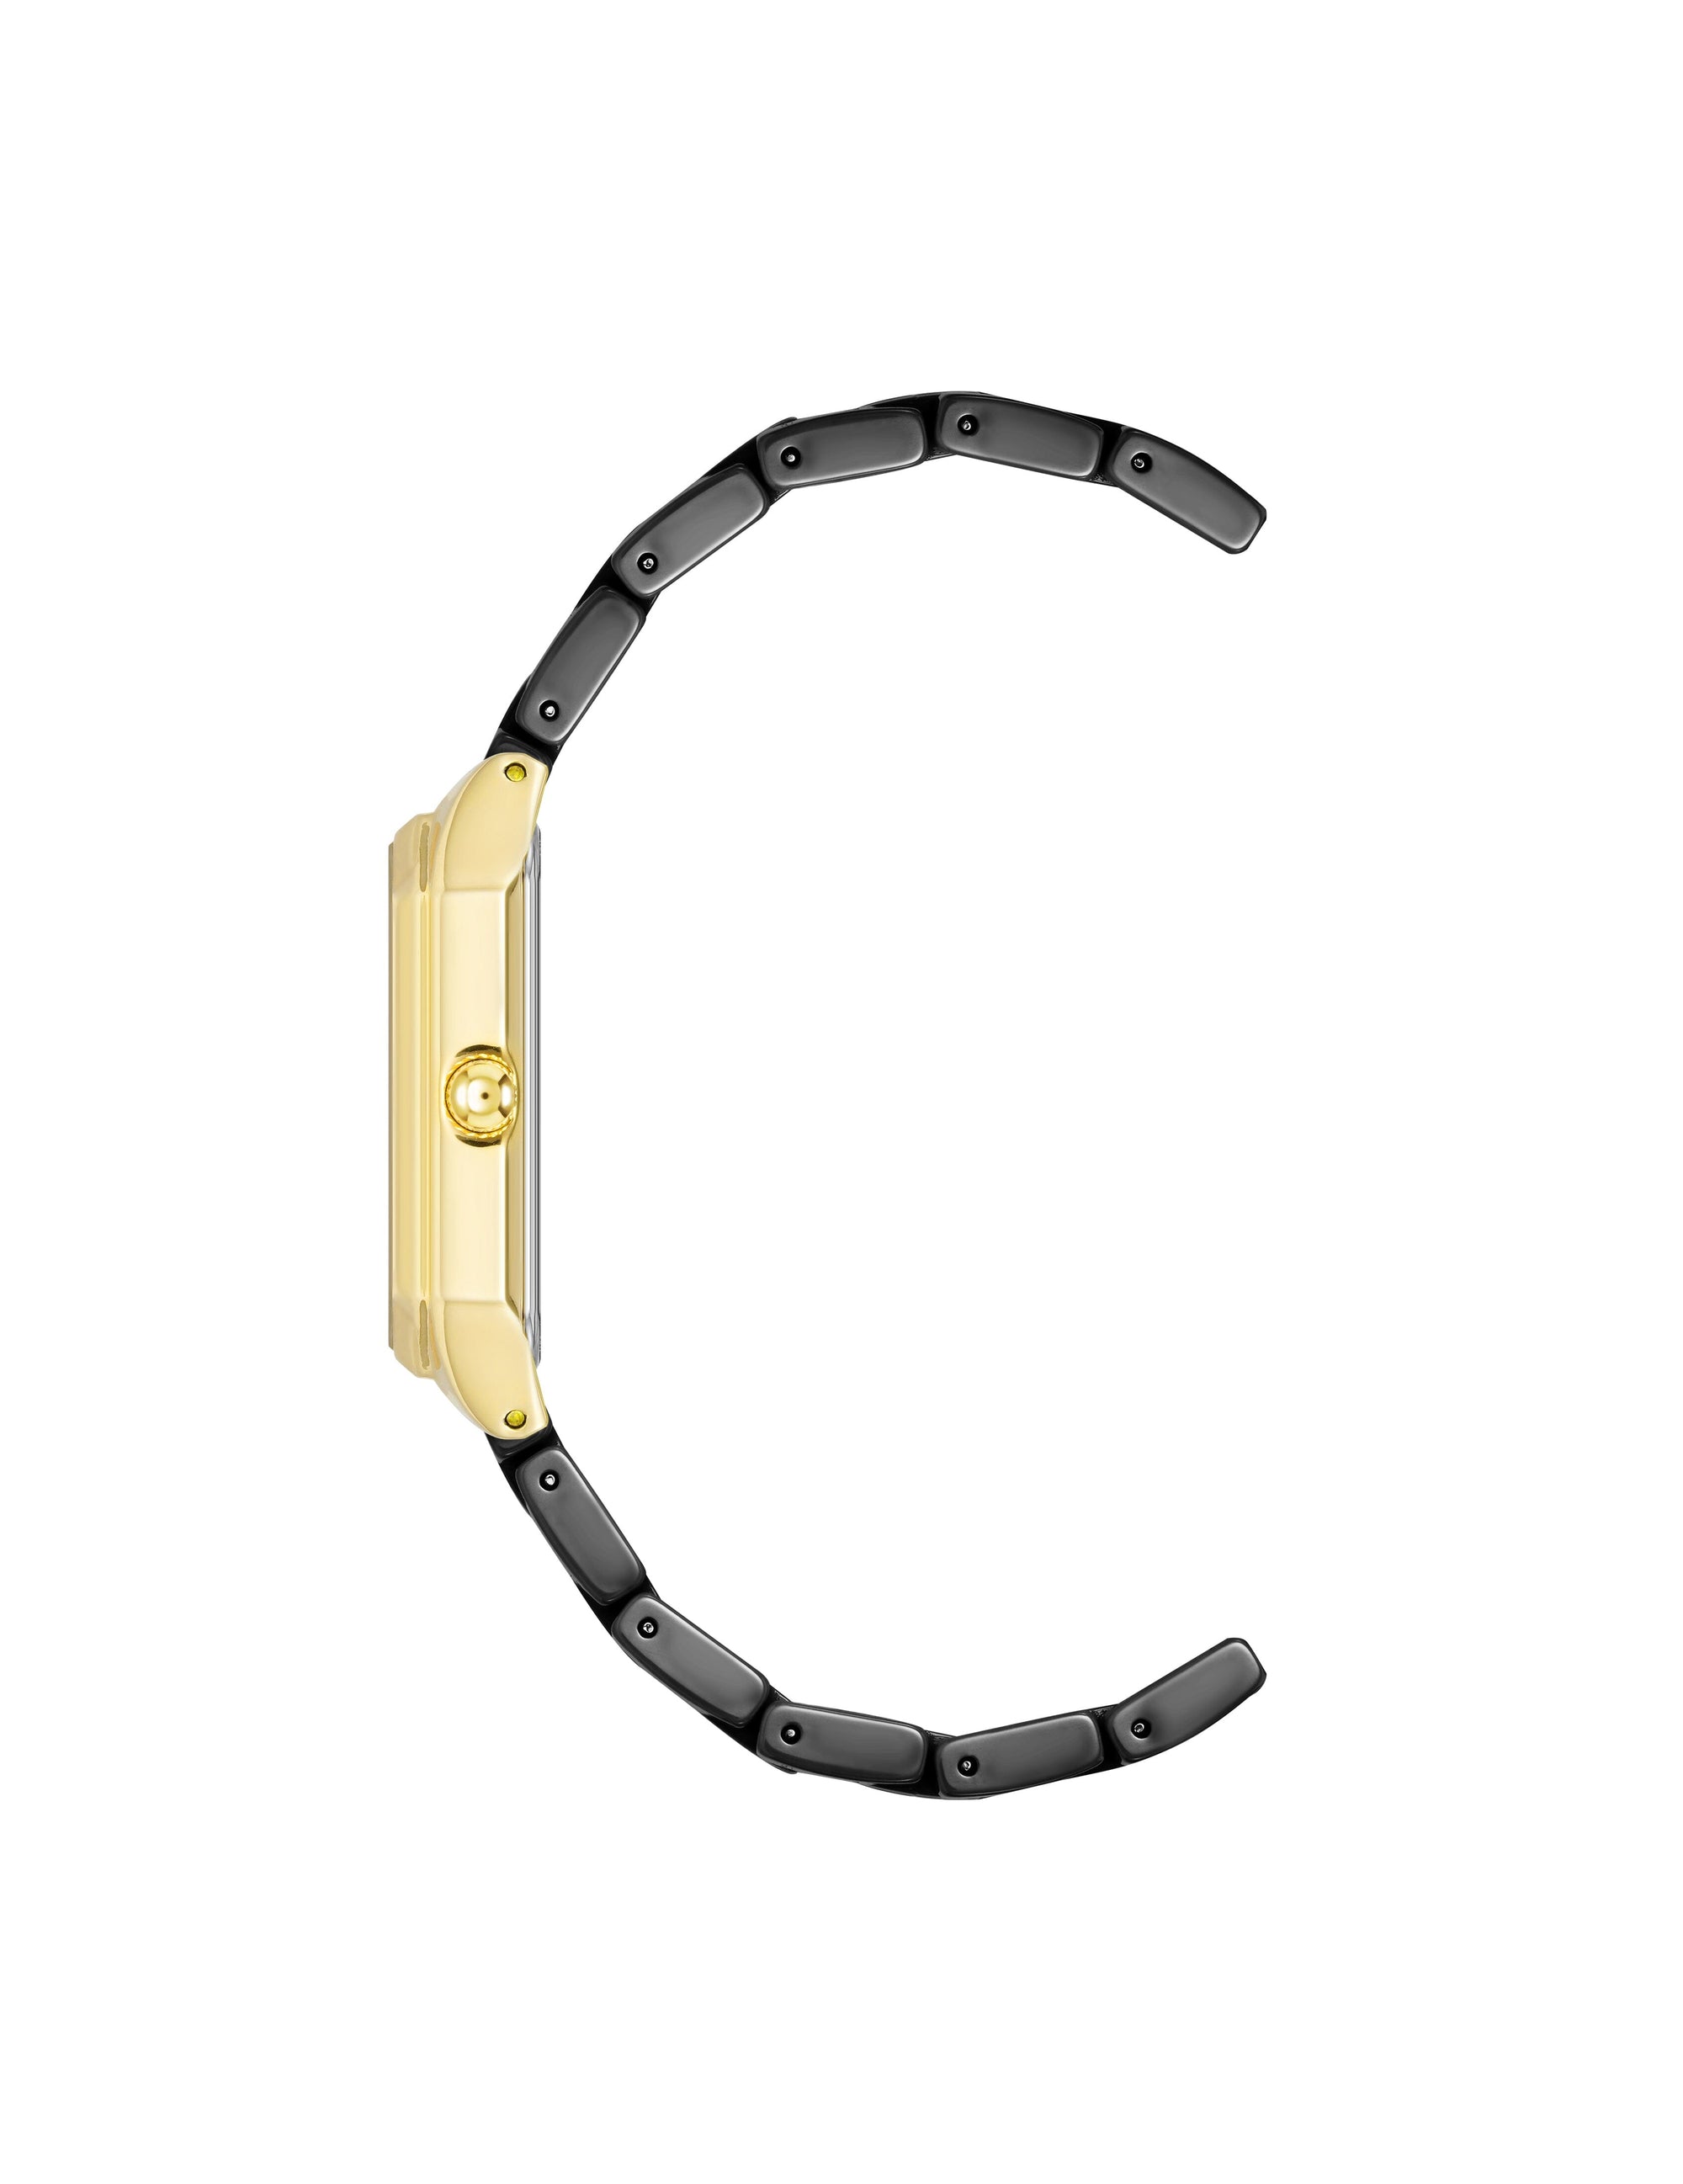 Anne Klein Gold-Tone/ Black Octagonal Ceramic Diamond Dial Watch